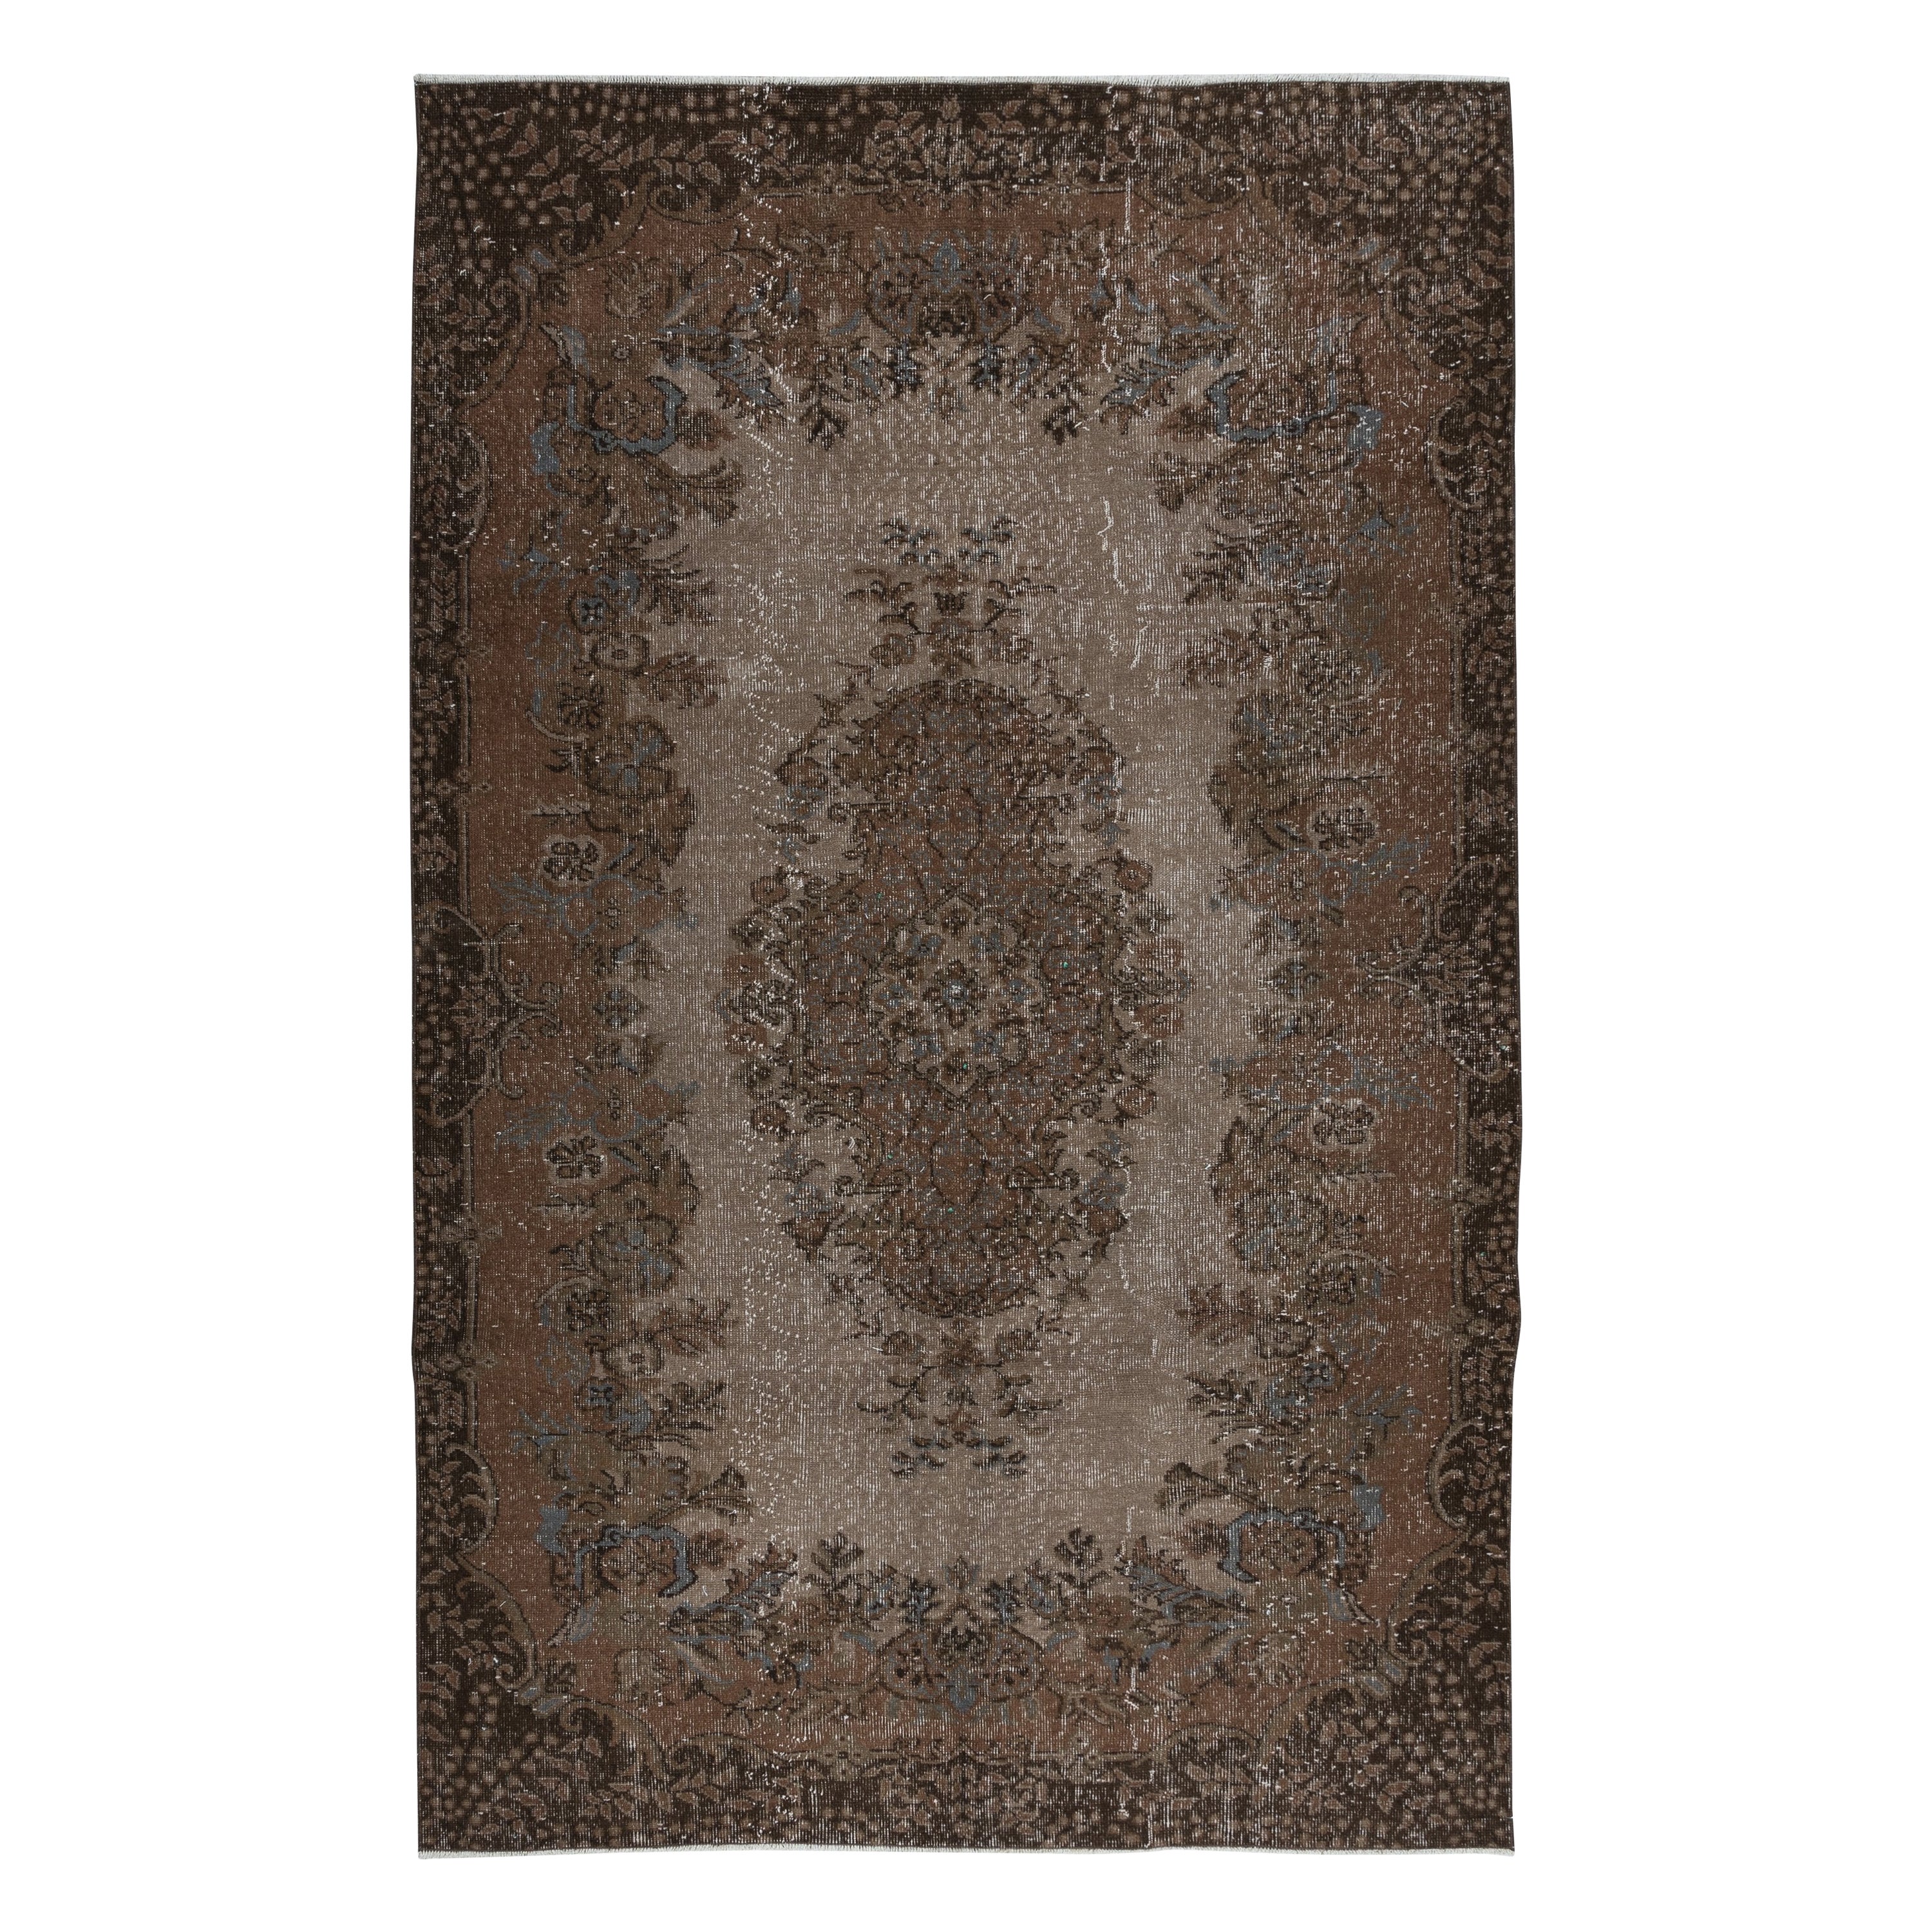 5.4x8.7 Ft Rustic Turkish Area Rug, Brown Handmade Contemporary Carpet (Tapis rustique turc, fait à la main)